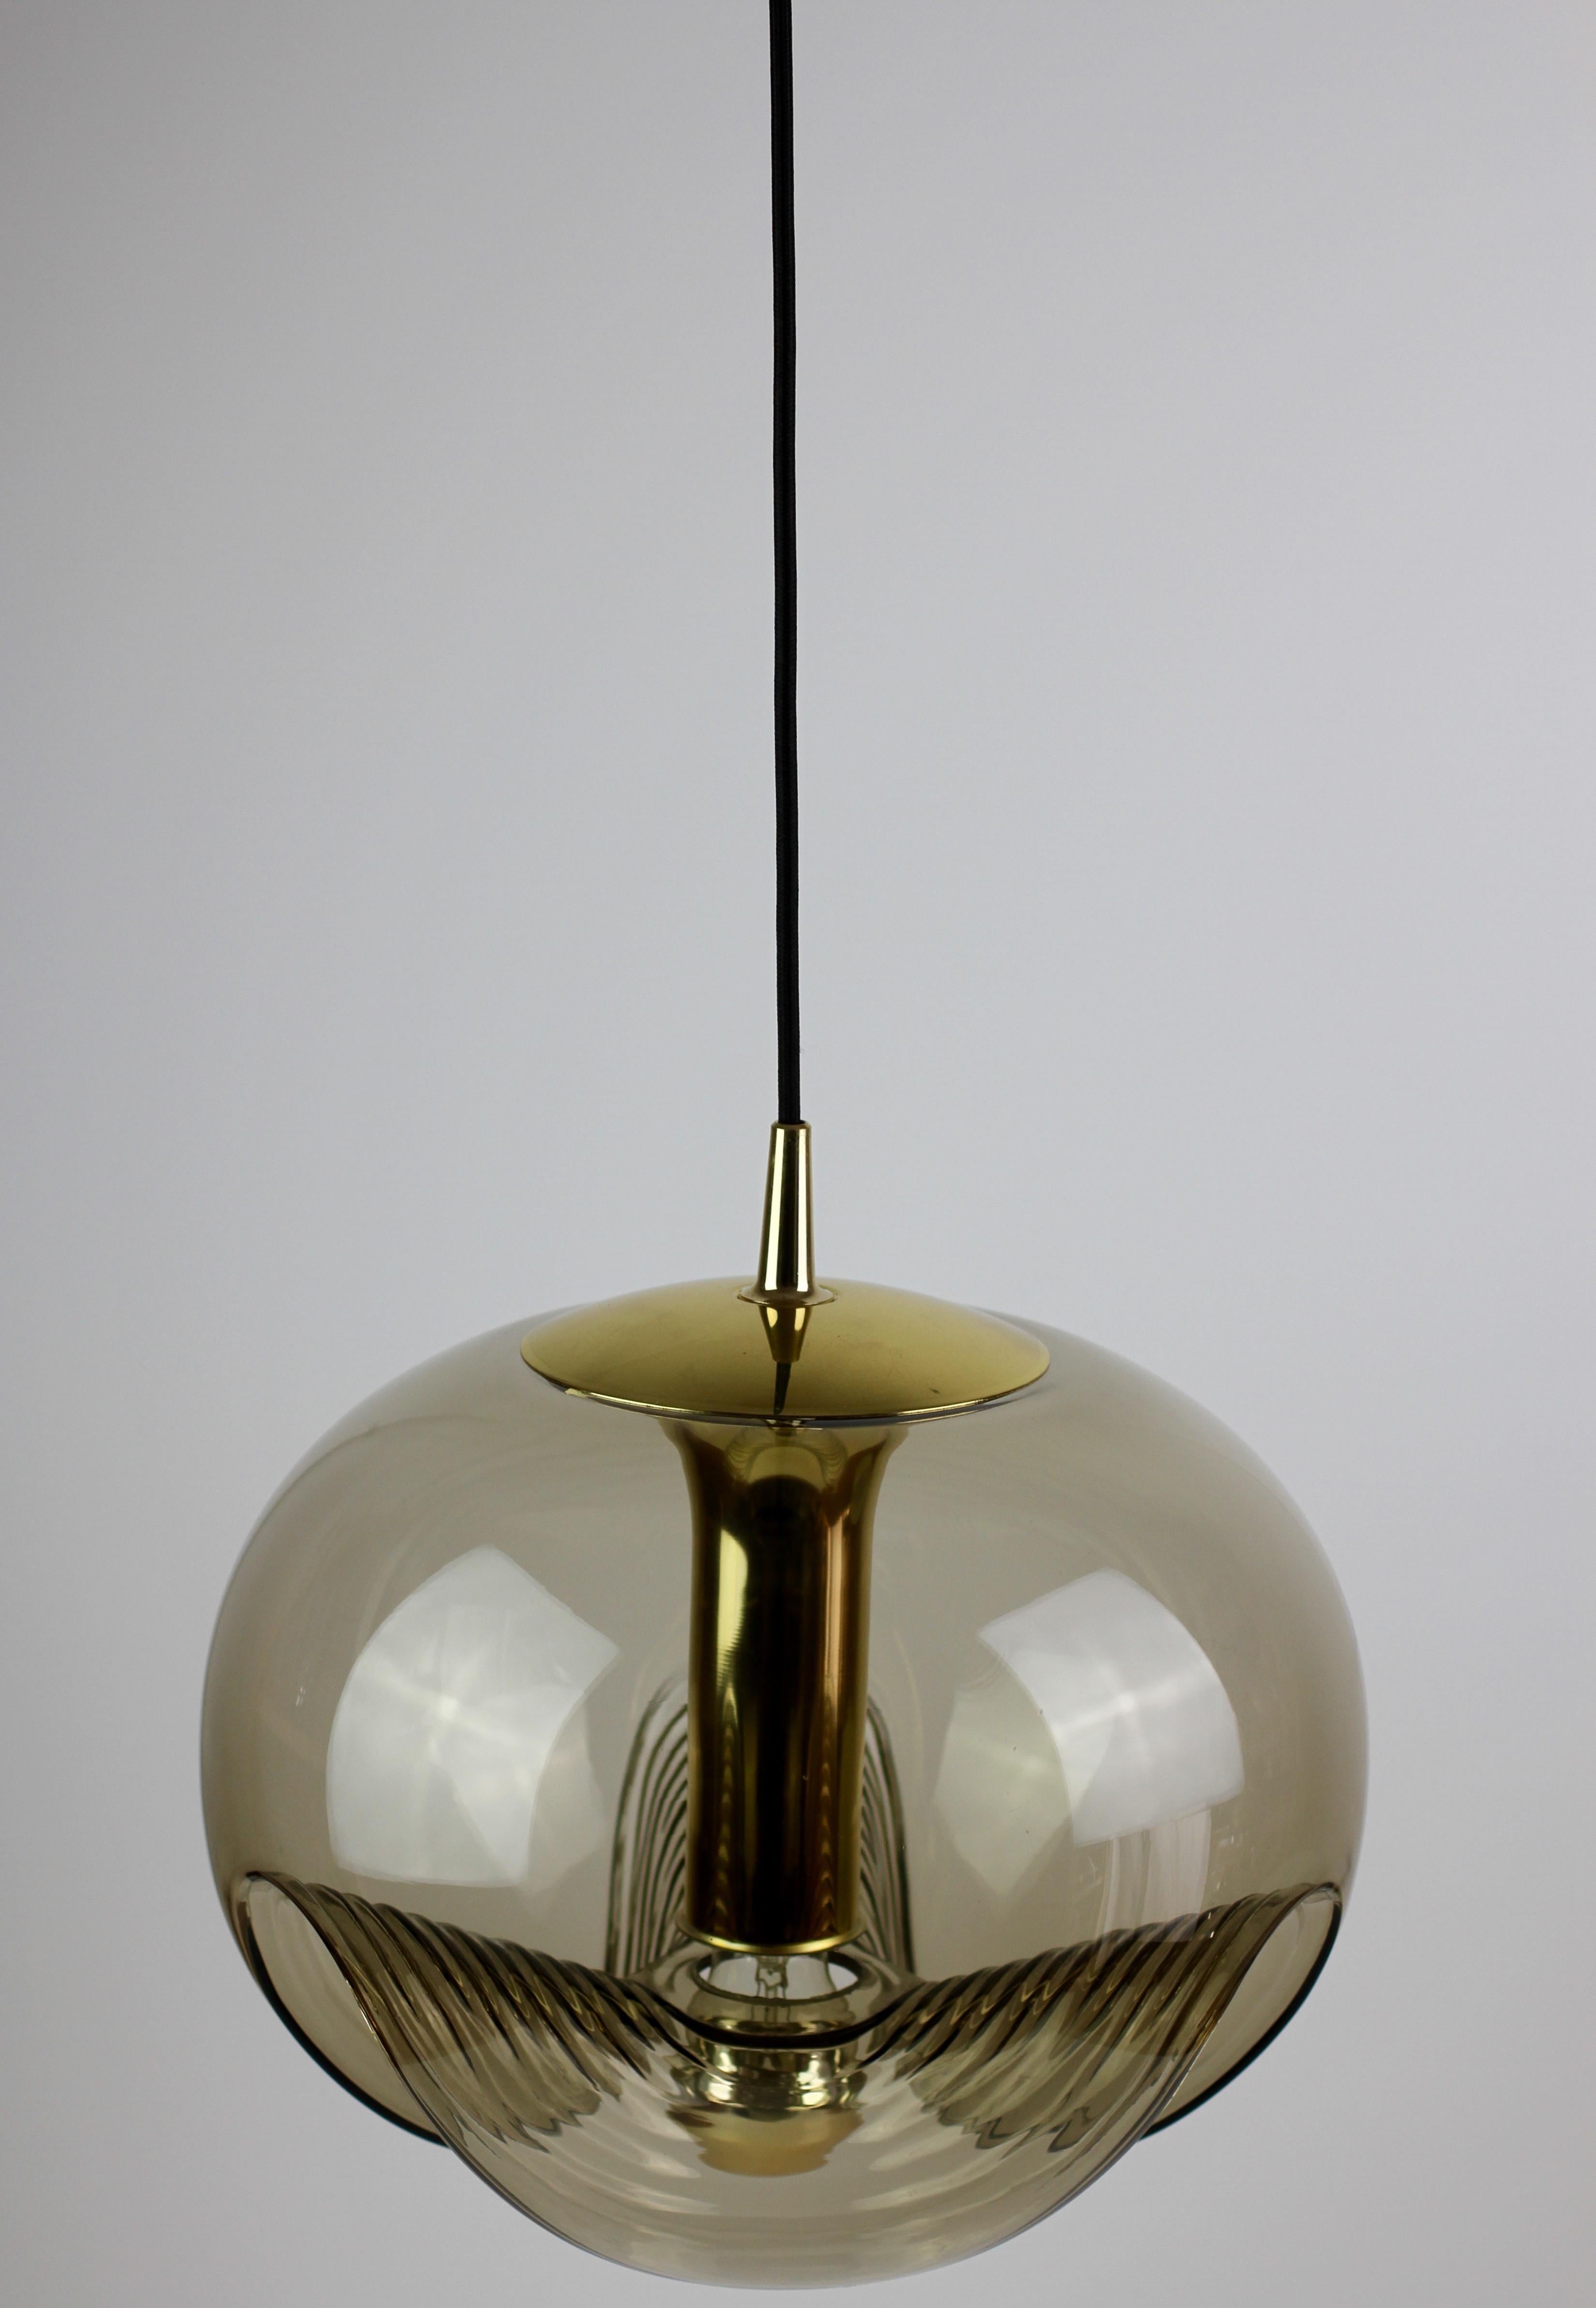 German 1 of 2 Peill & Putzler Large Biomorphic Hanging Pendant Lights Lamps, C. 1975 For Sale